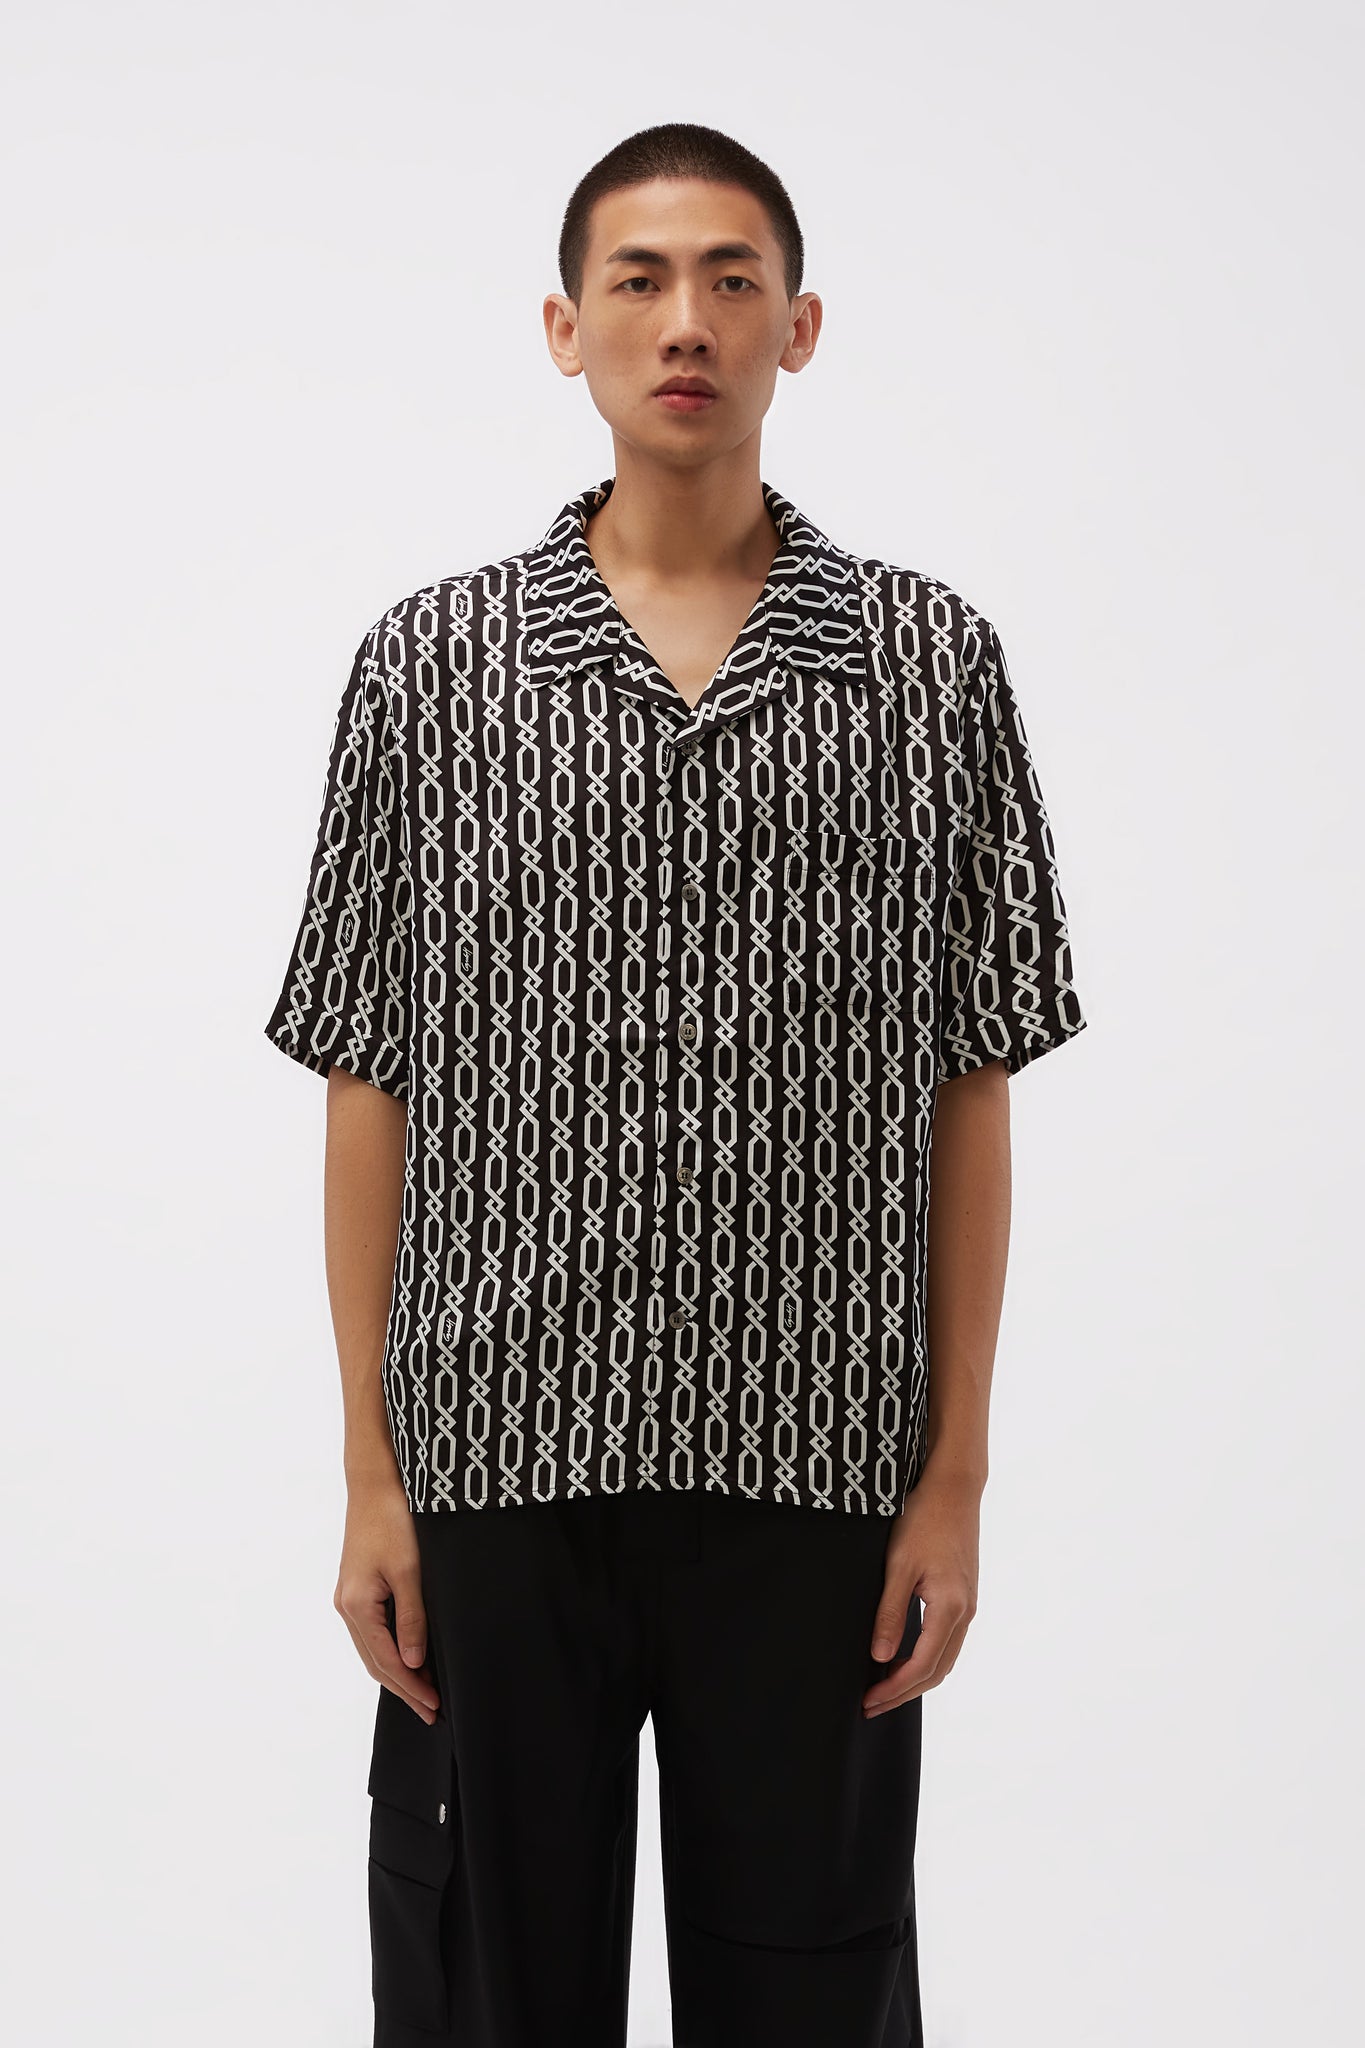 Bowling Shirt With Digital Print Chains Black/white